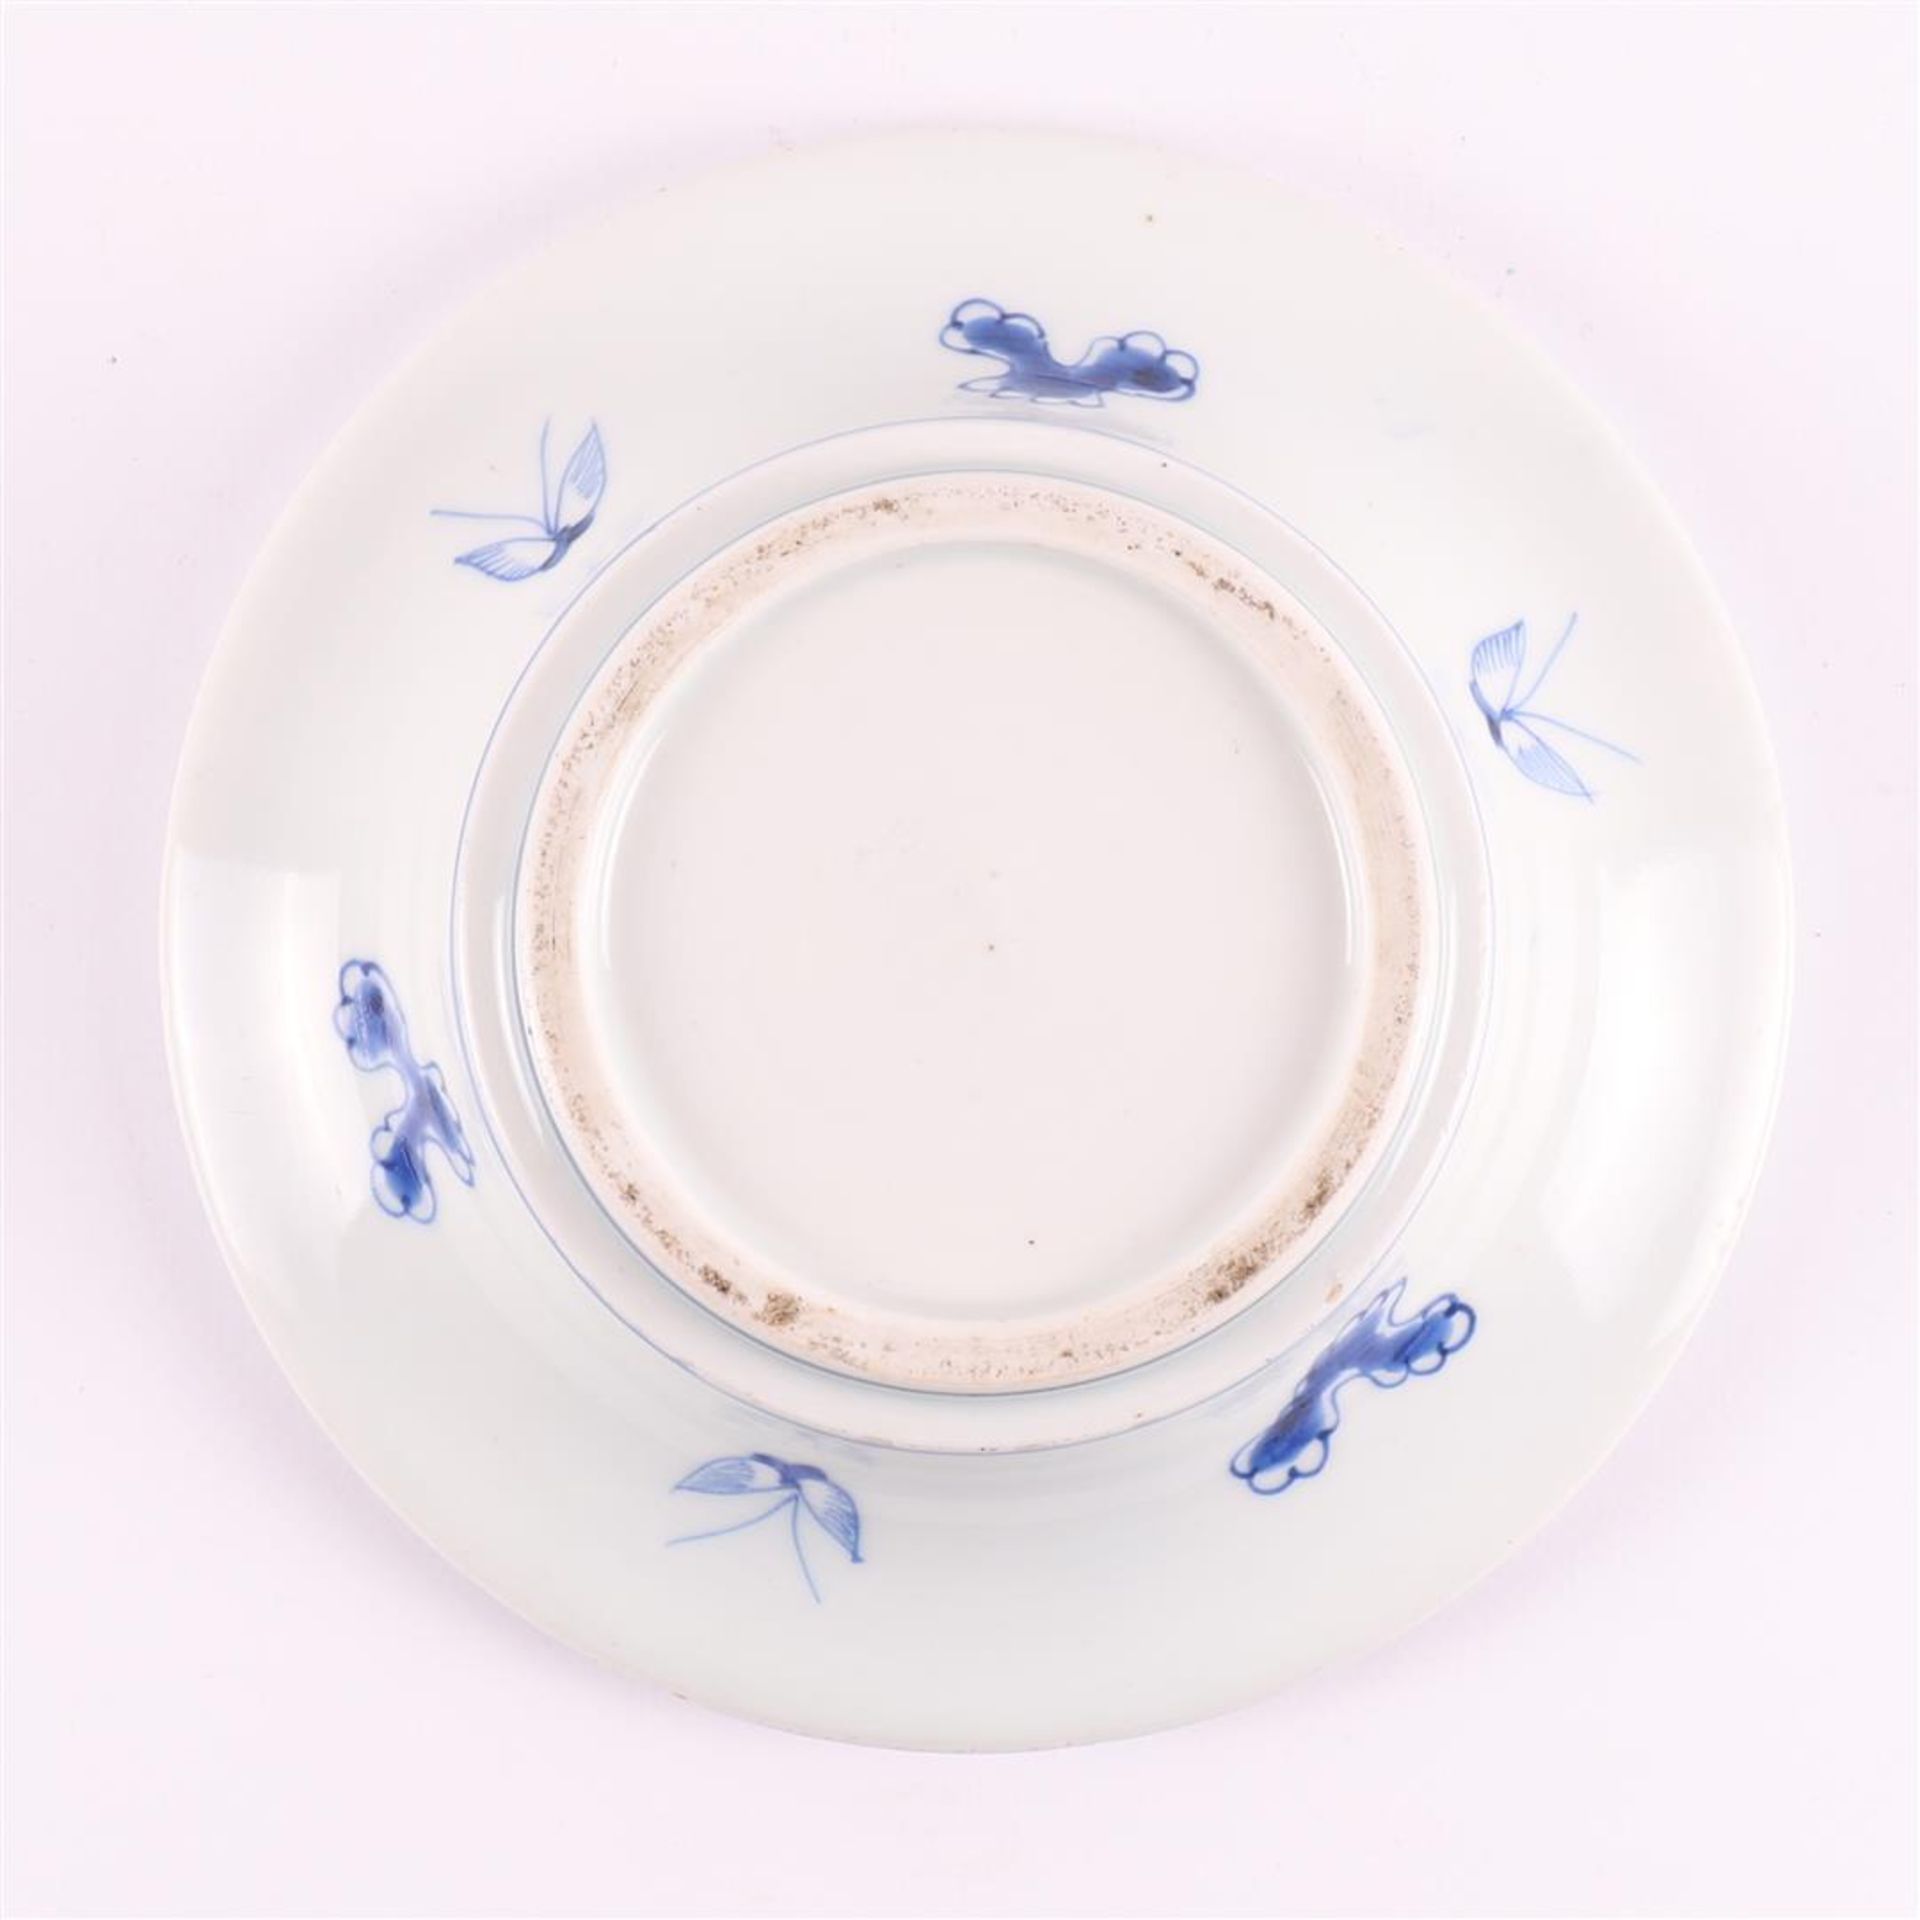 A blue/white porcelain lidded bowl, Japan, 19th century. - Image 5 of 6